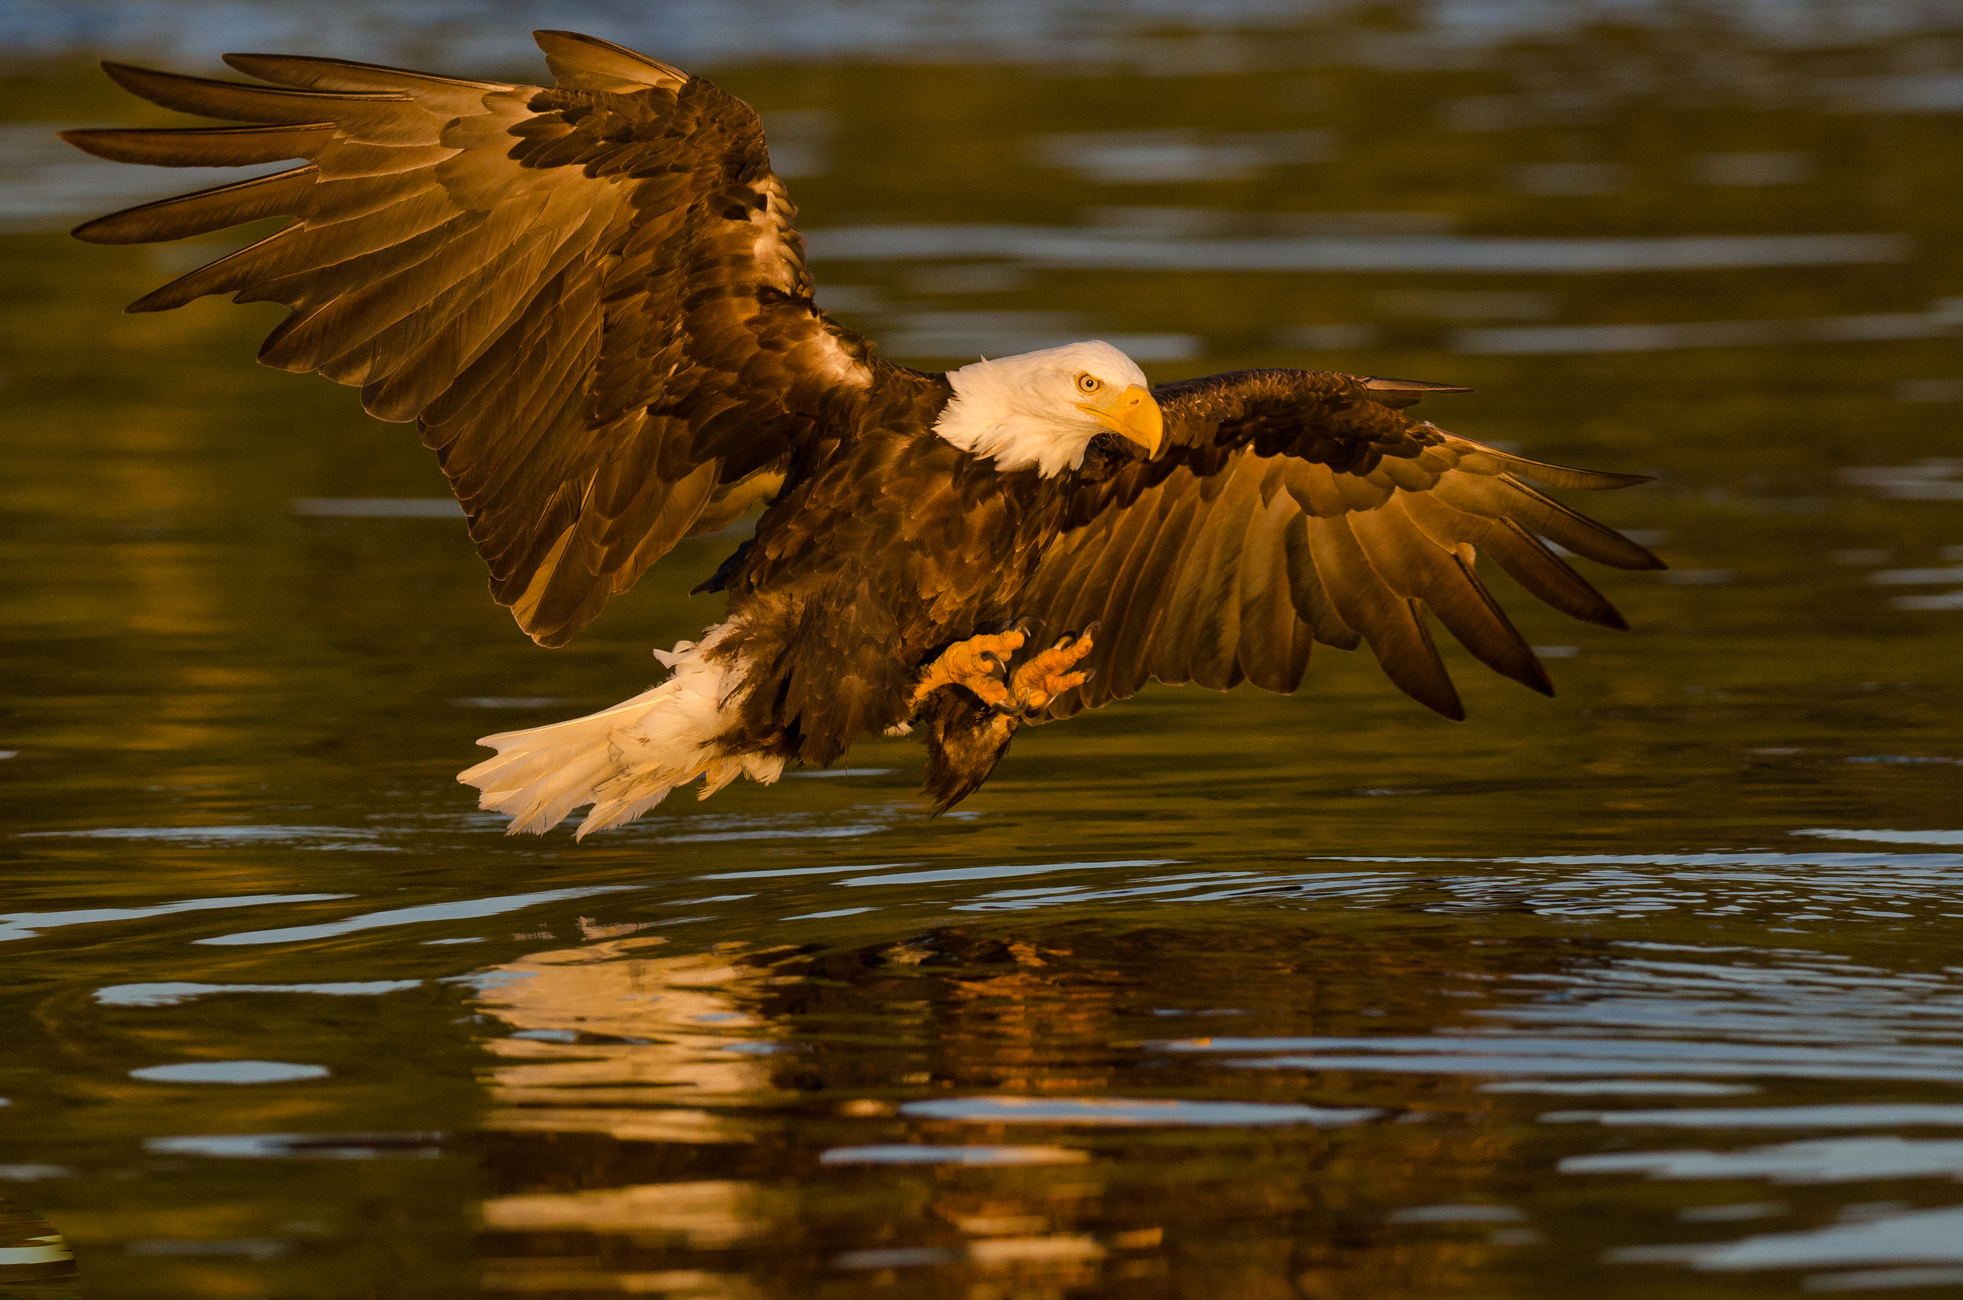  A bald eagle fishing at sunset 